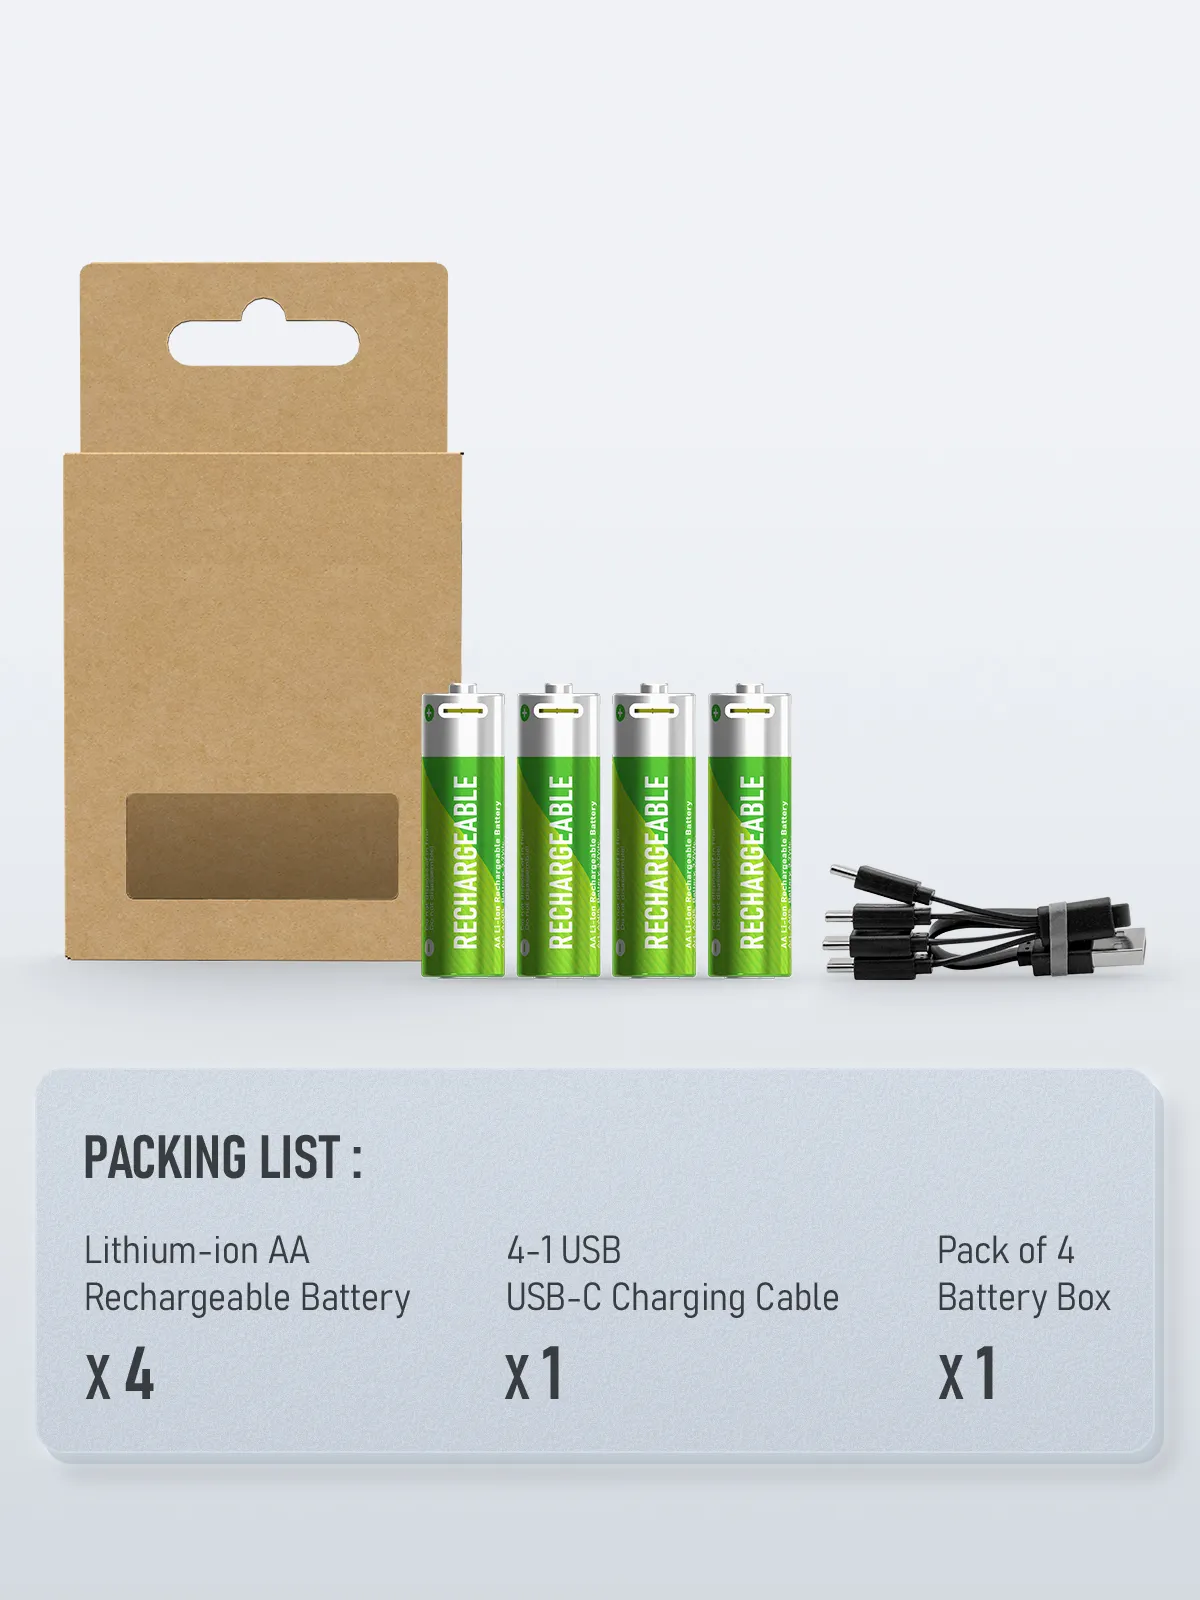 Oem Veiligheid 1000 + Cycli Keer Leven 1.5V 2550mwh Type C Poort Usb Aa Lithium Oplaadbare Batterij